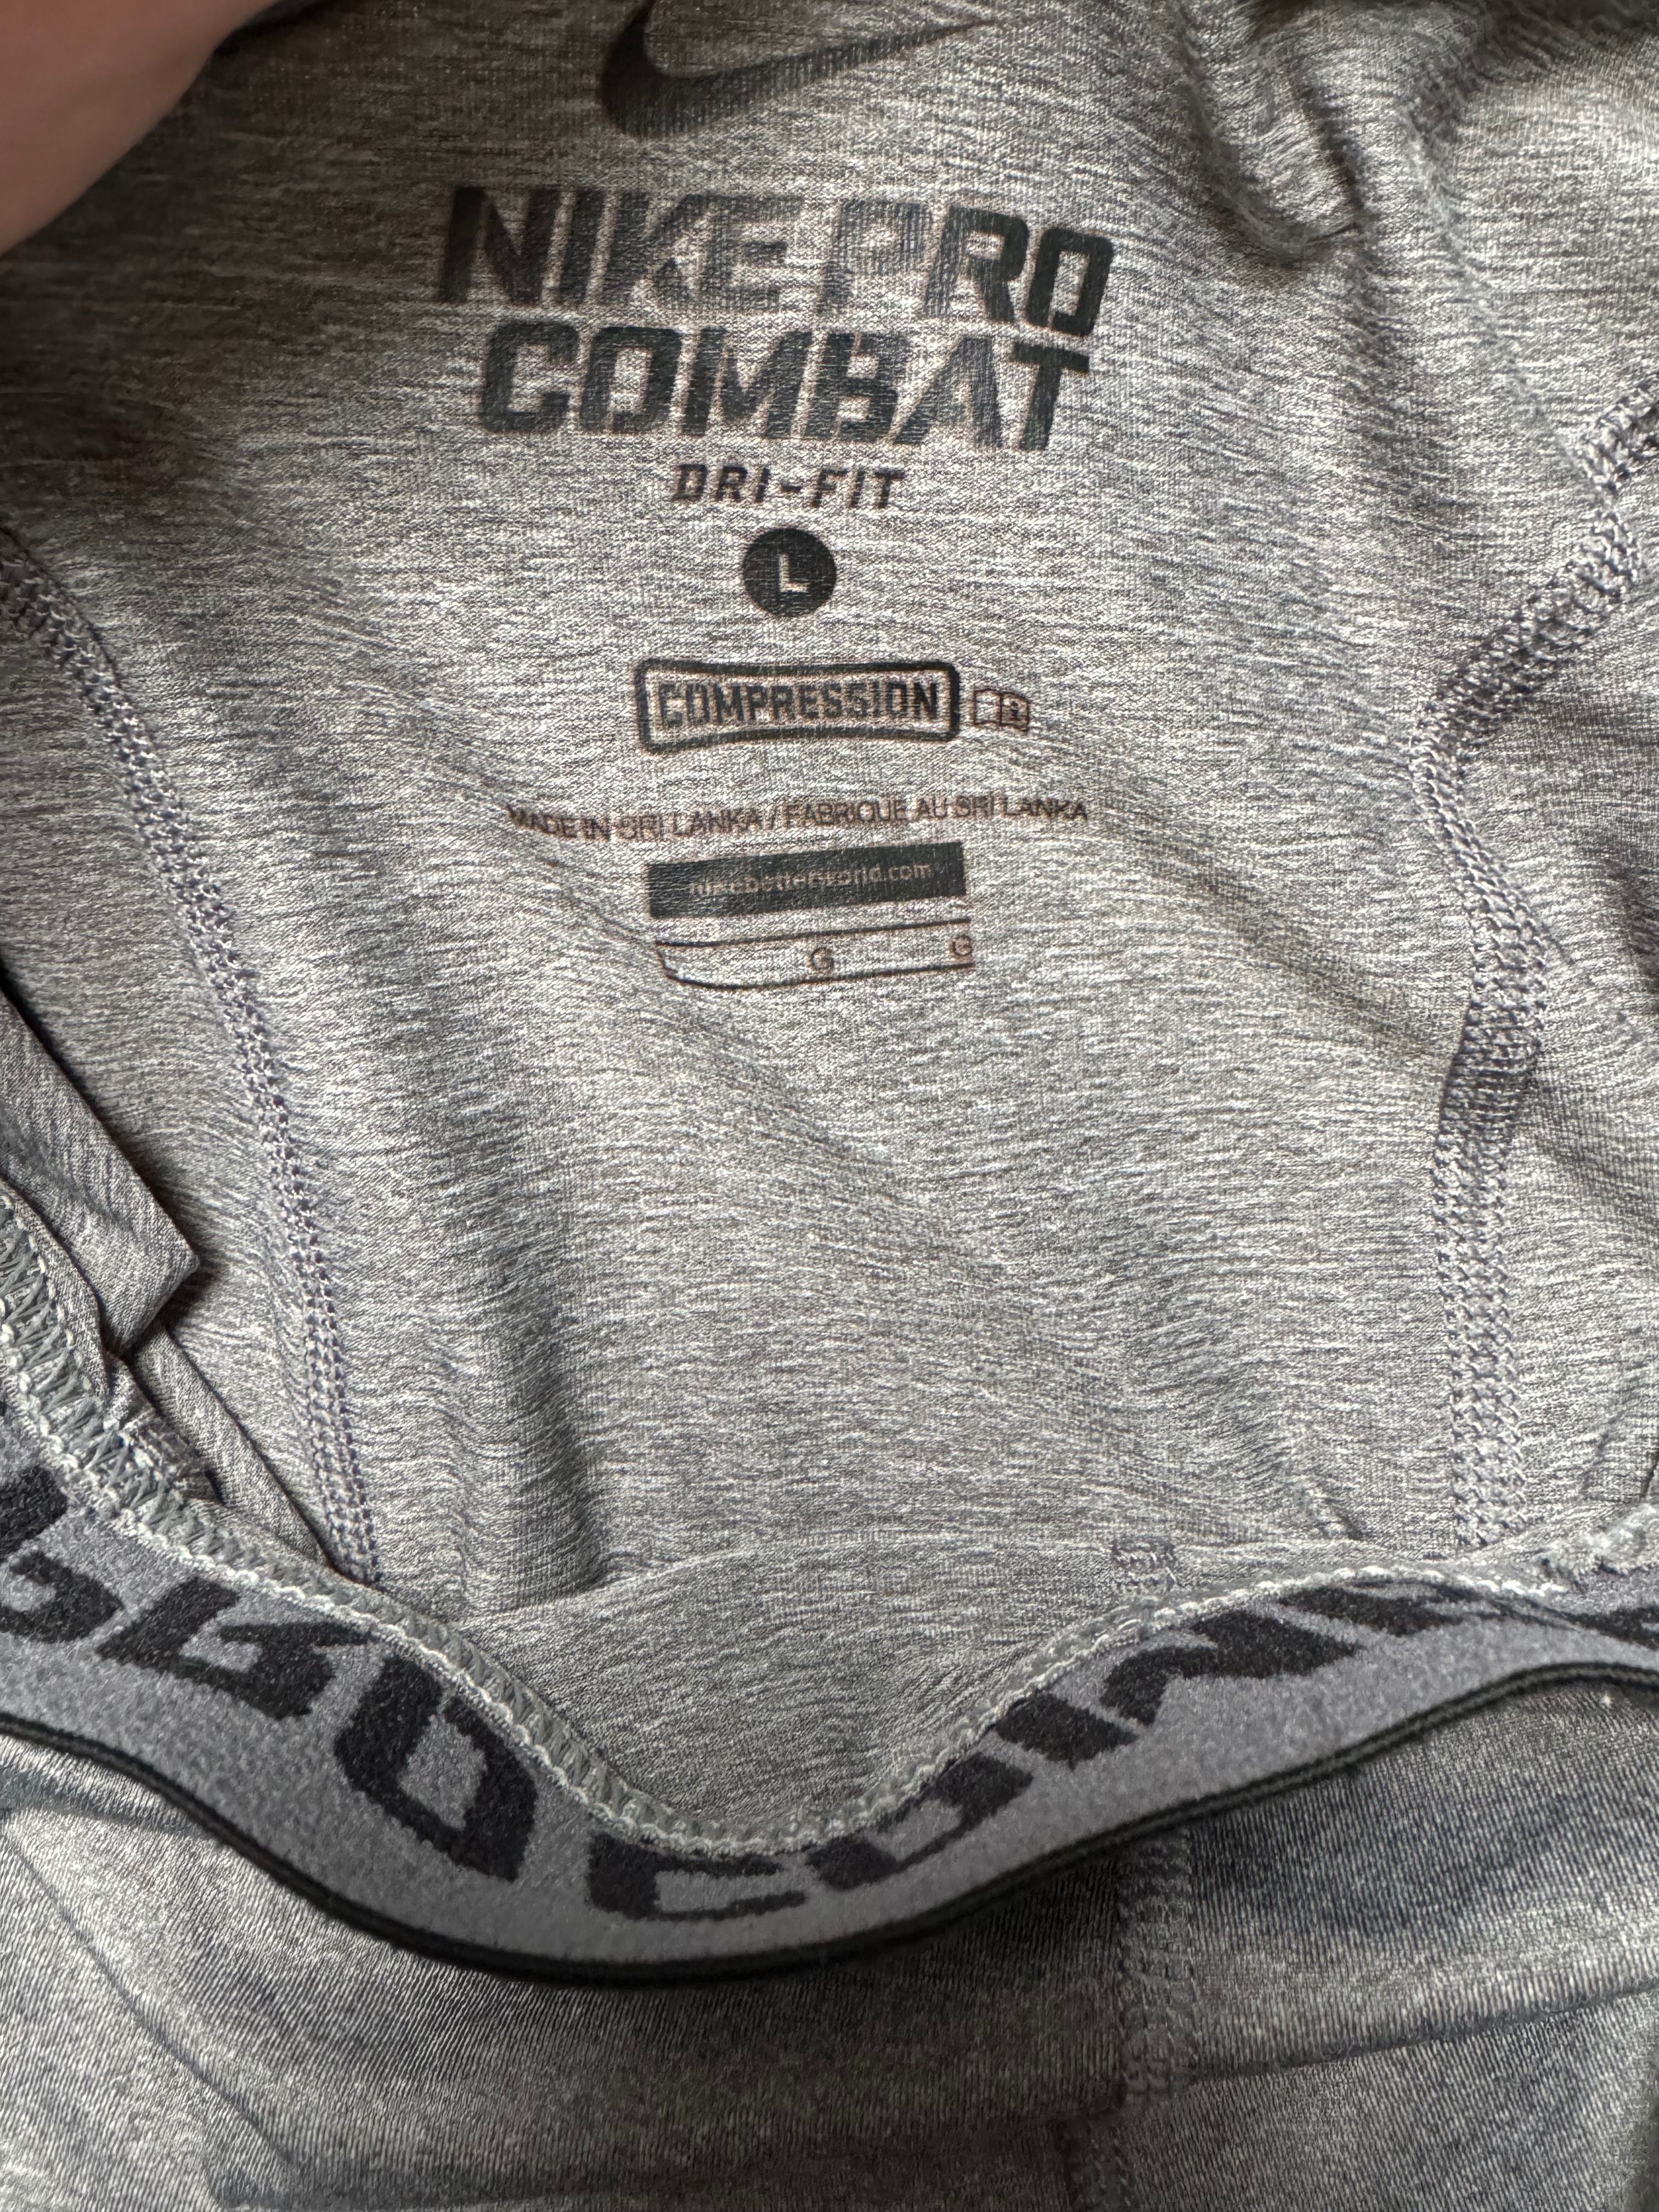 Szorty spodenki krótkie Nike Pro Combat r. L Kompresyjne Compression